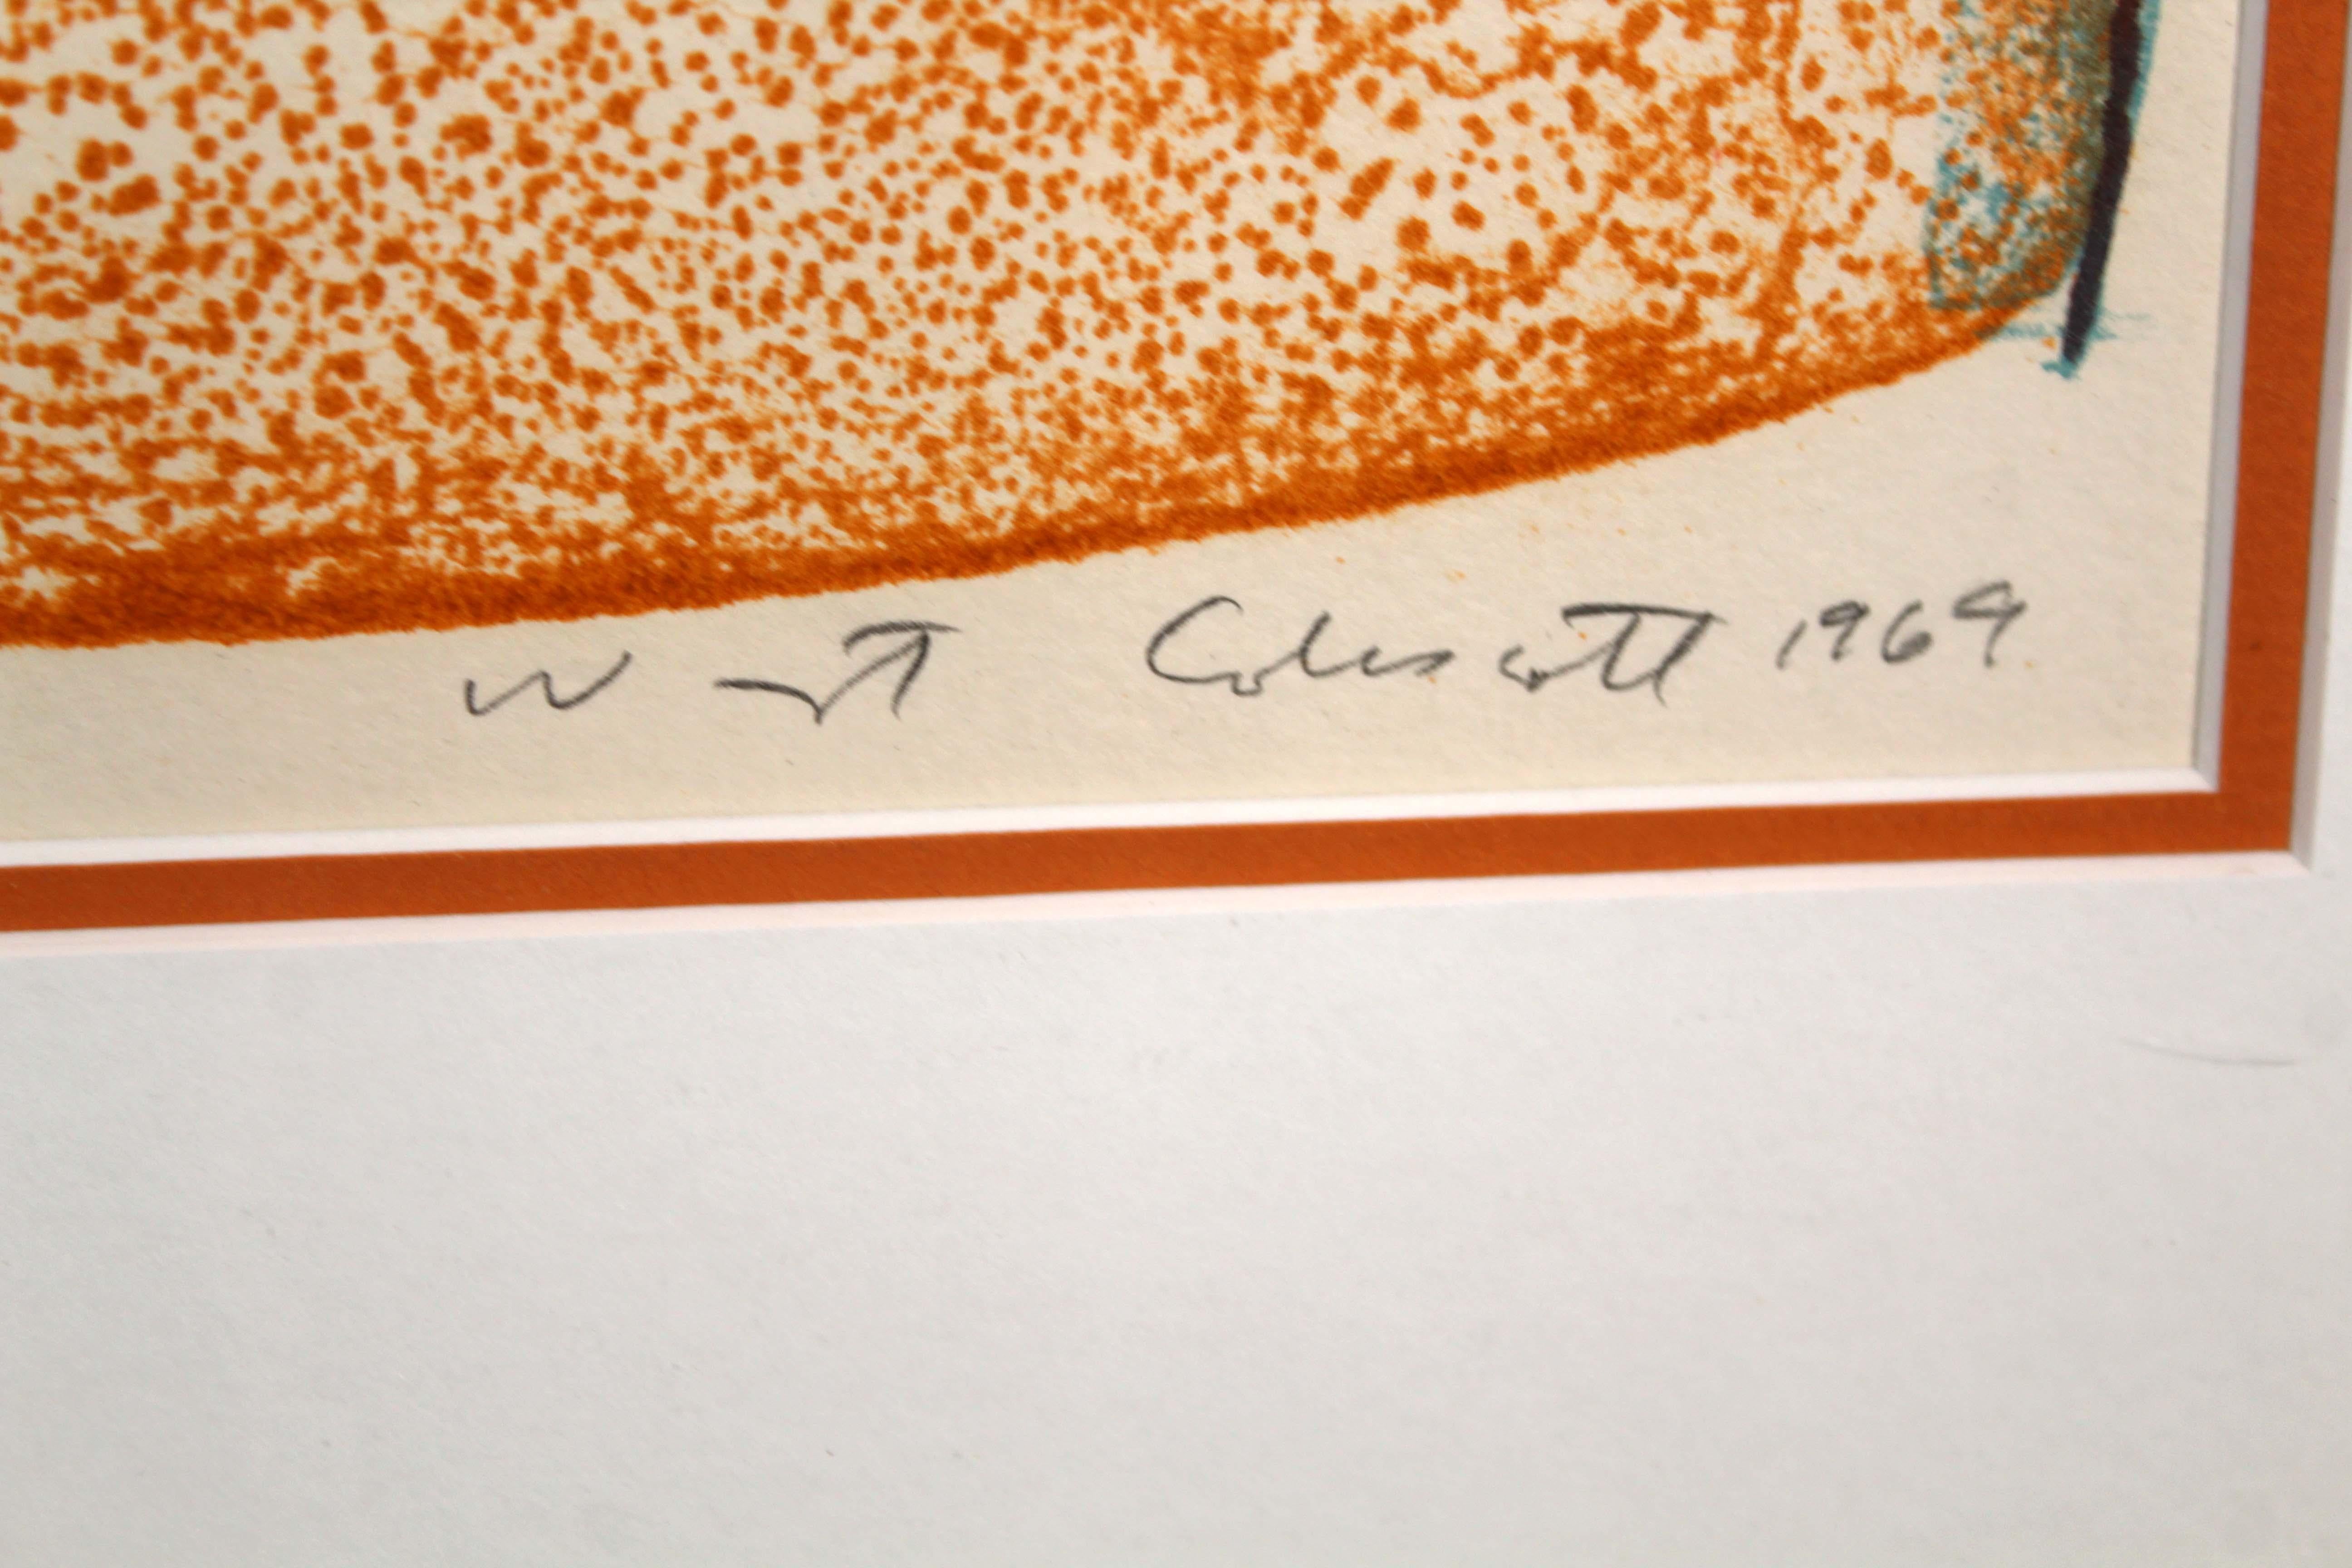 Warrington Colescott Frances at Calamity’s Place 1969 Signed Lithograph 29/40 7